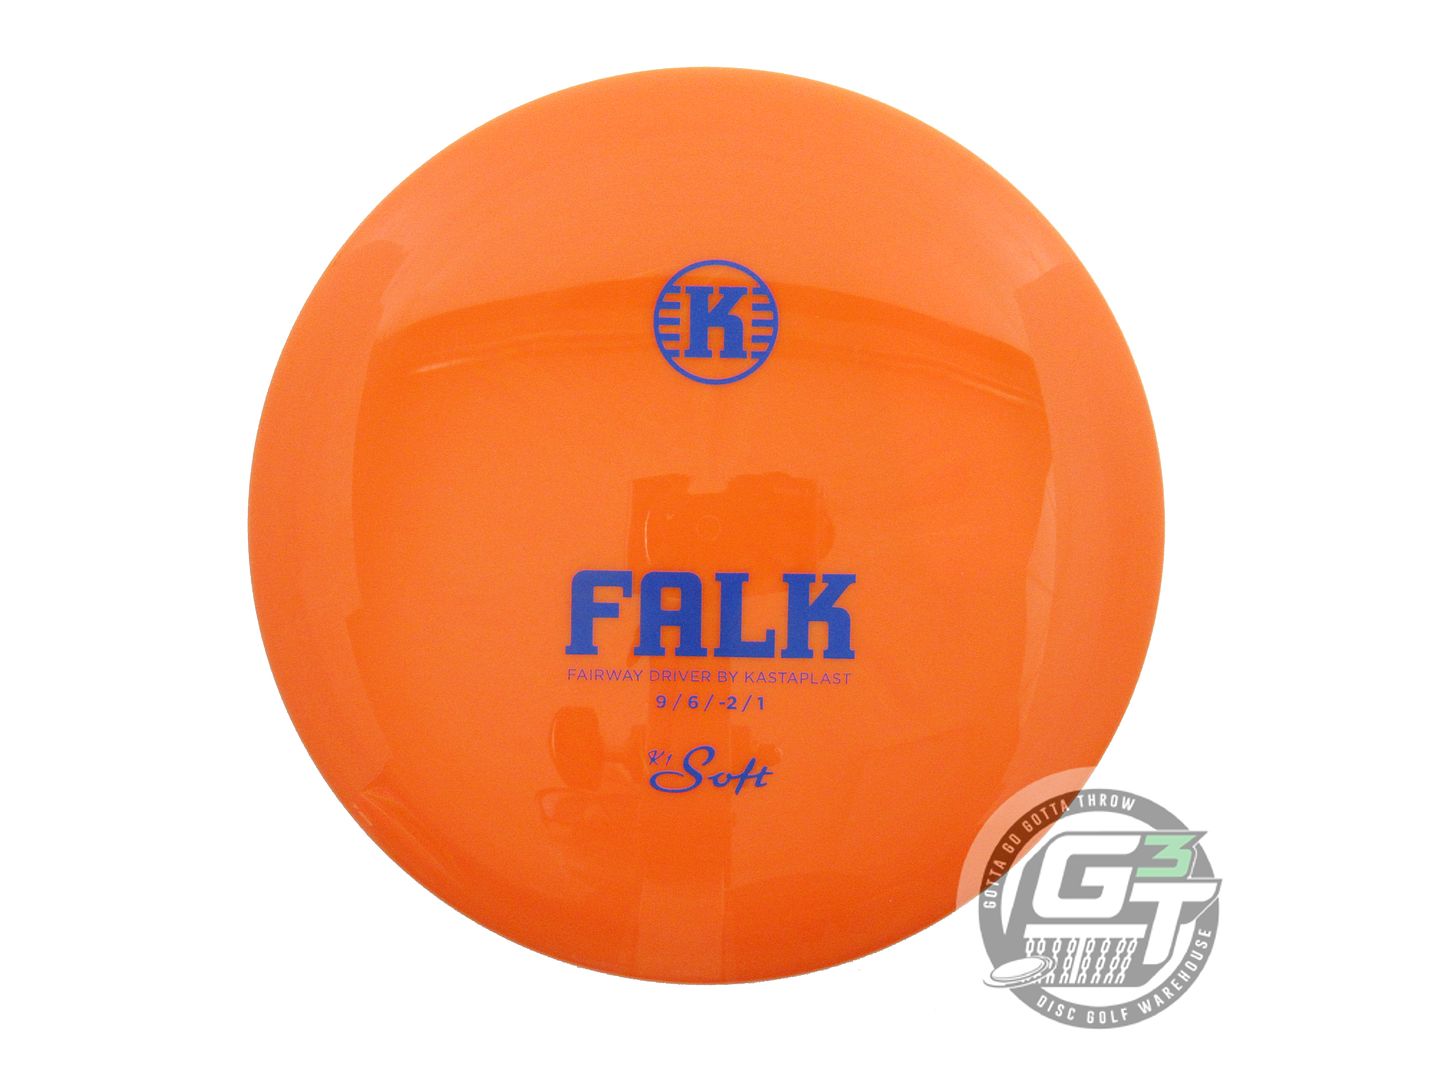 Kastaplast K1 Soft Falk Fairway Driver Golf Disc (Individually Listed)